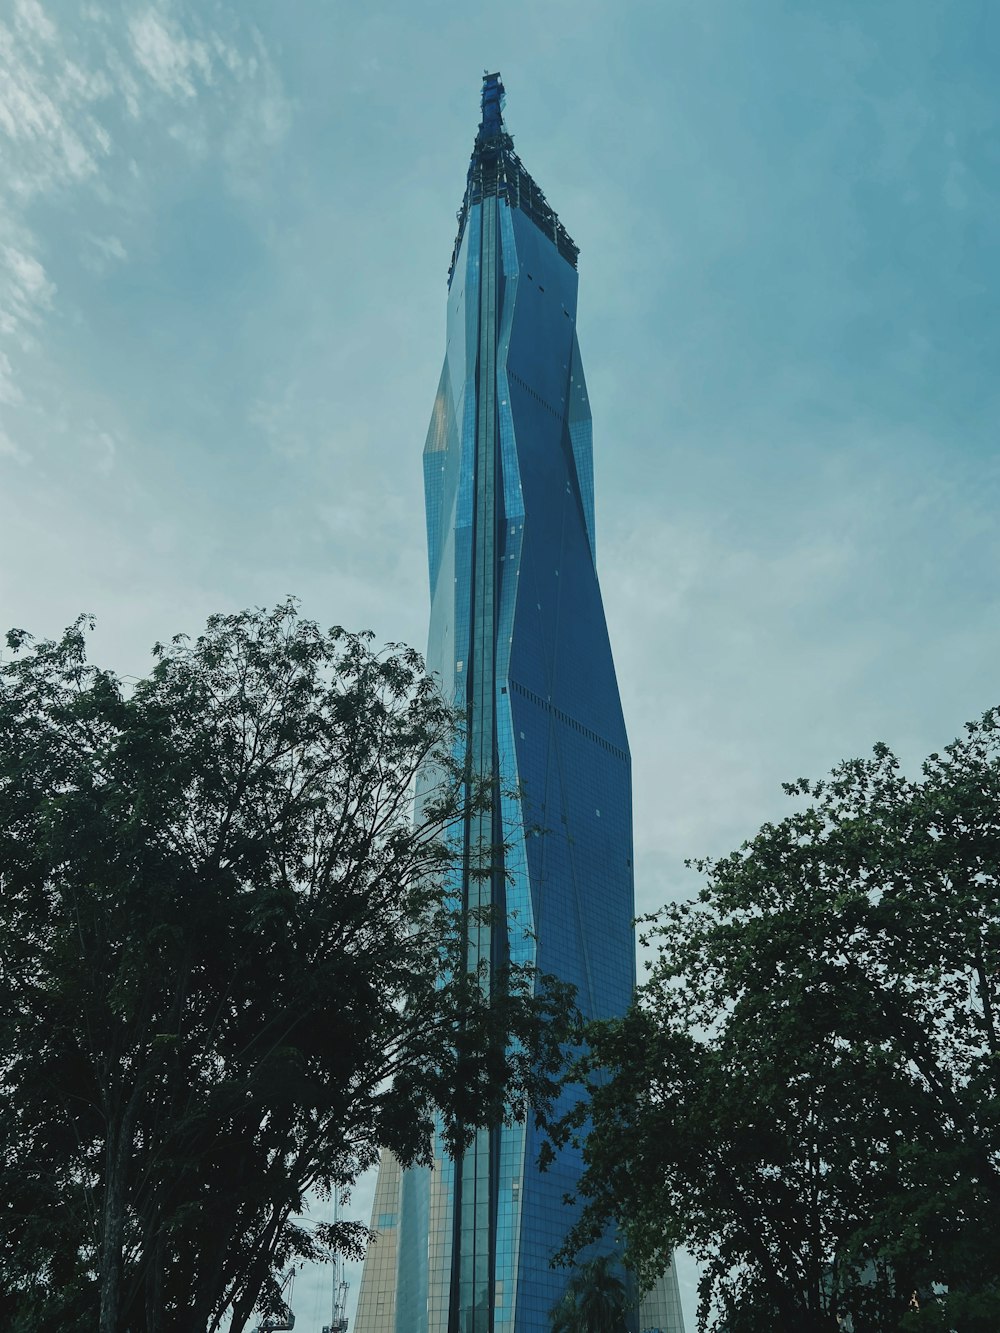 Un edificio muy alto que se eleva sobre un bosque de árboles